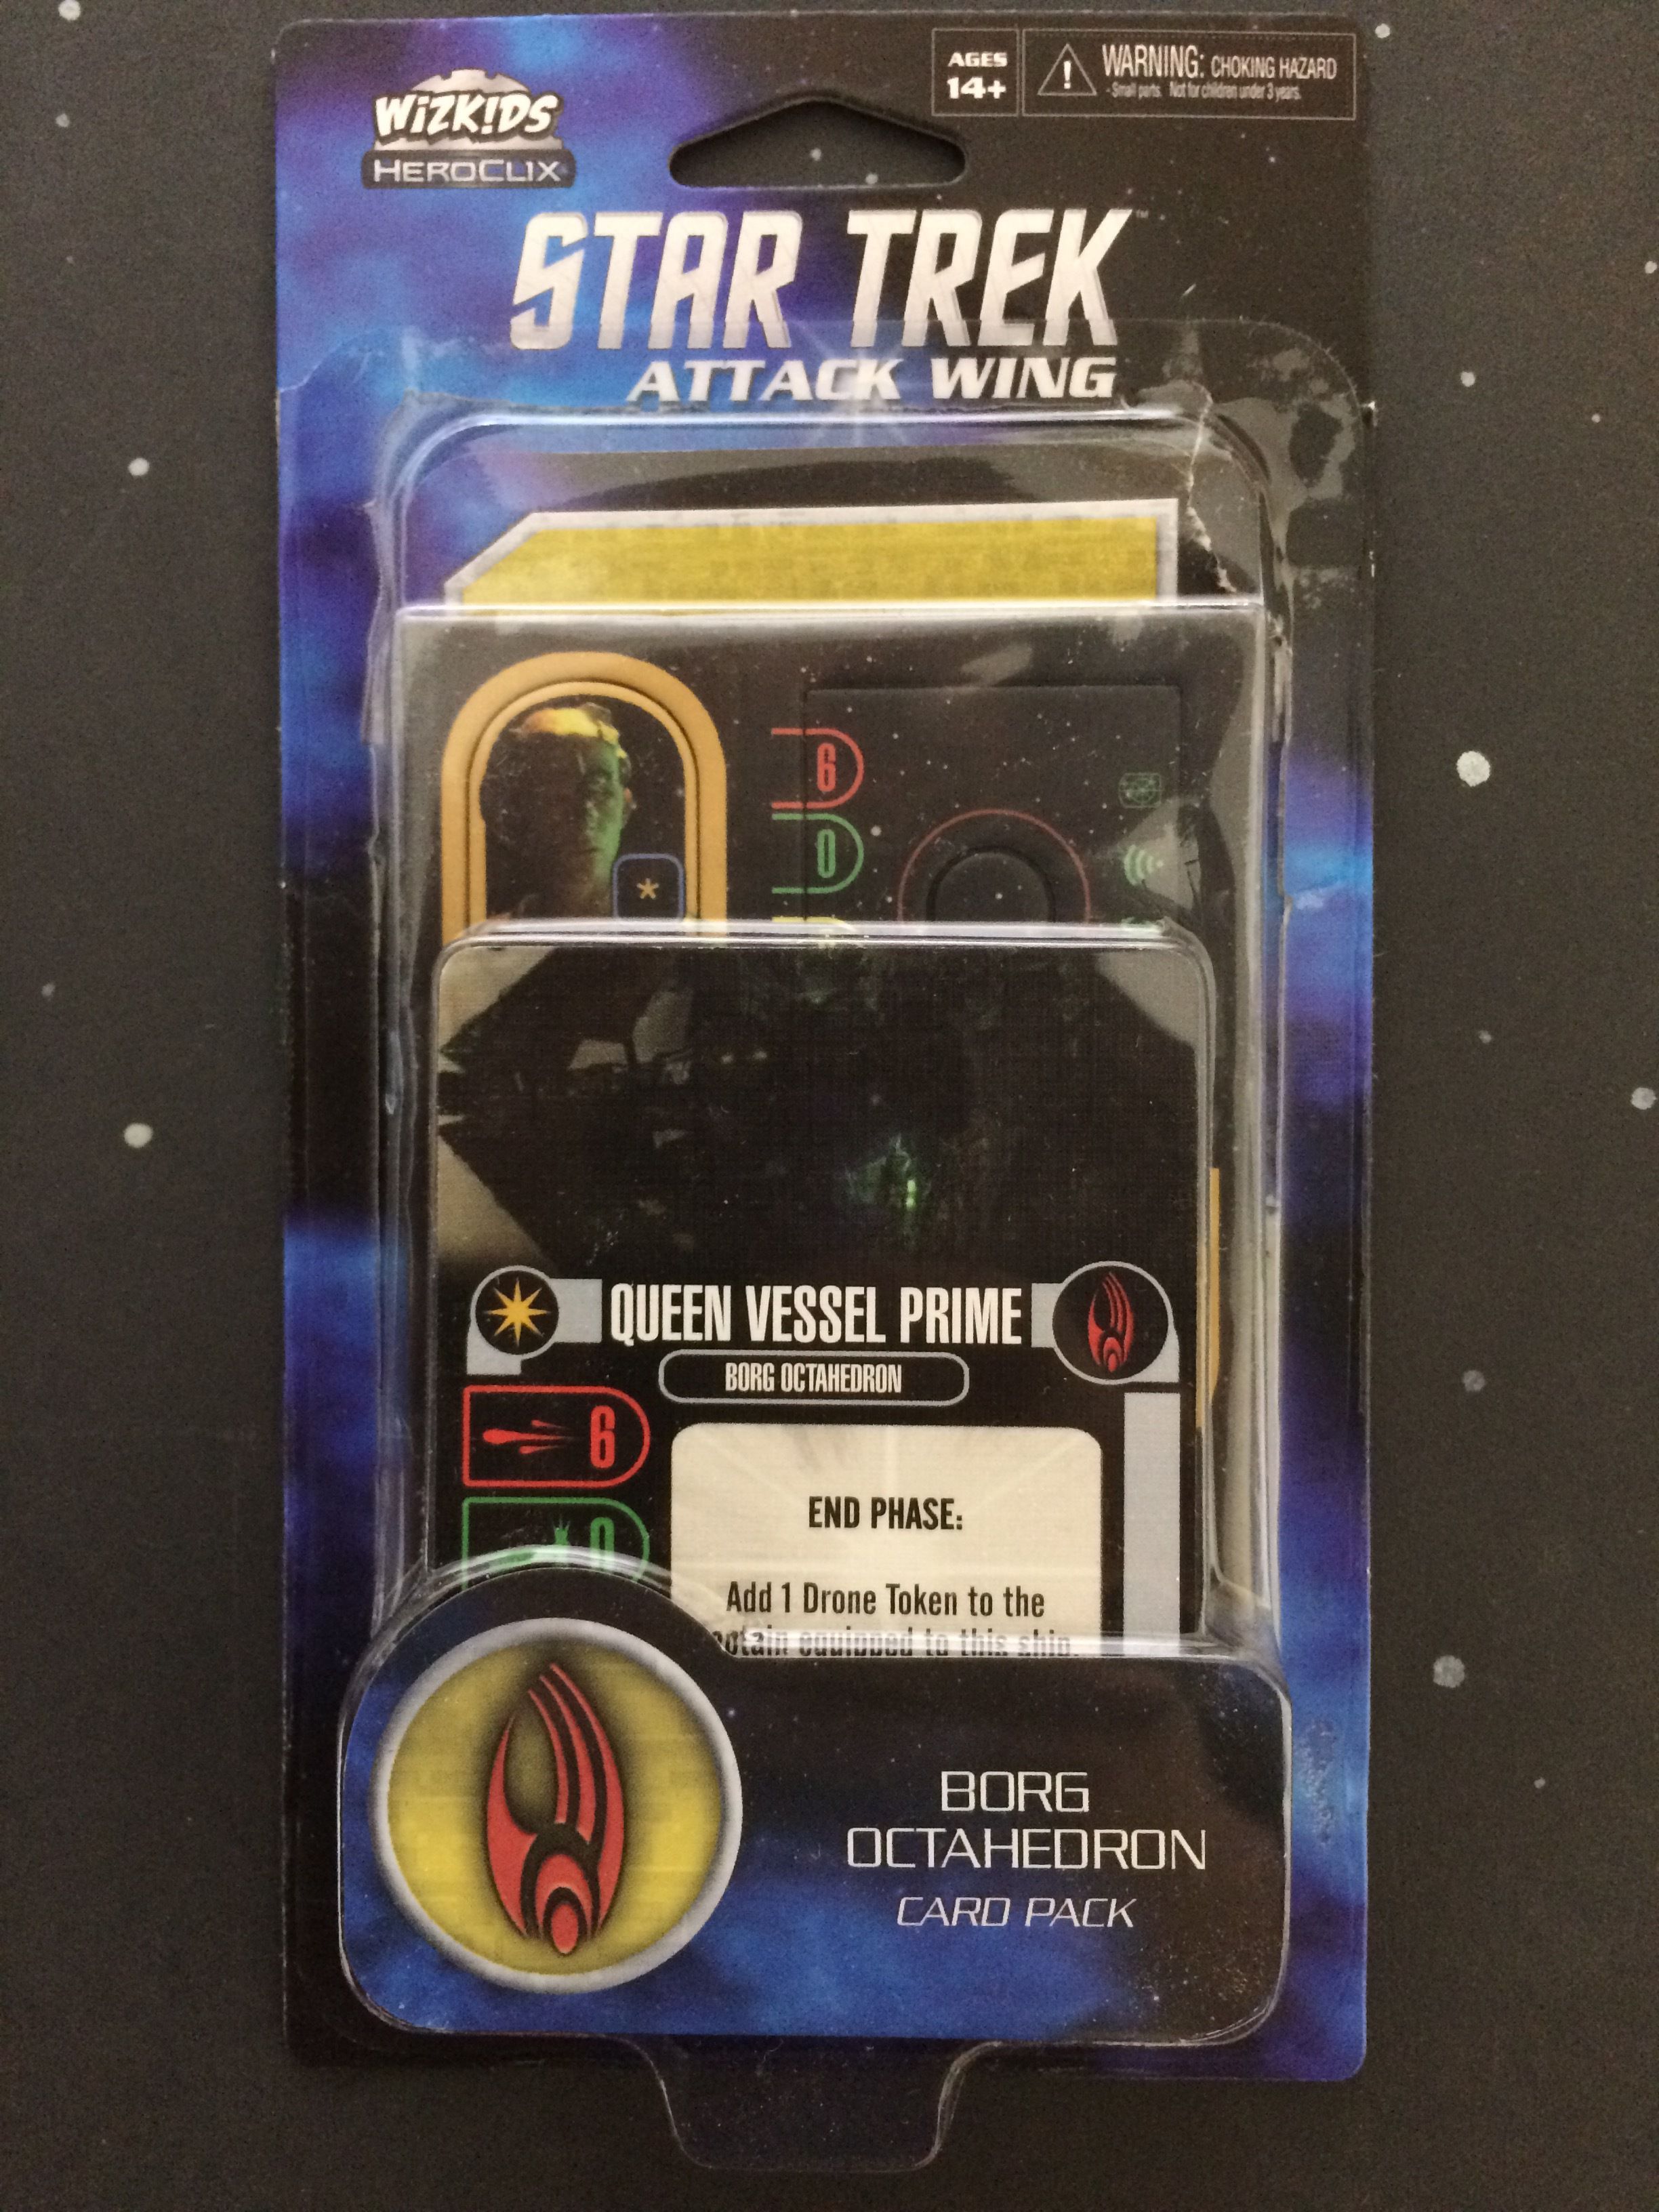 Star Trek: Attack Wing – Queen Vessel Prime Card Pack